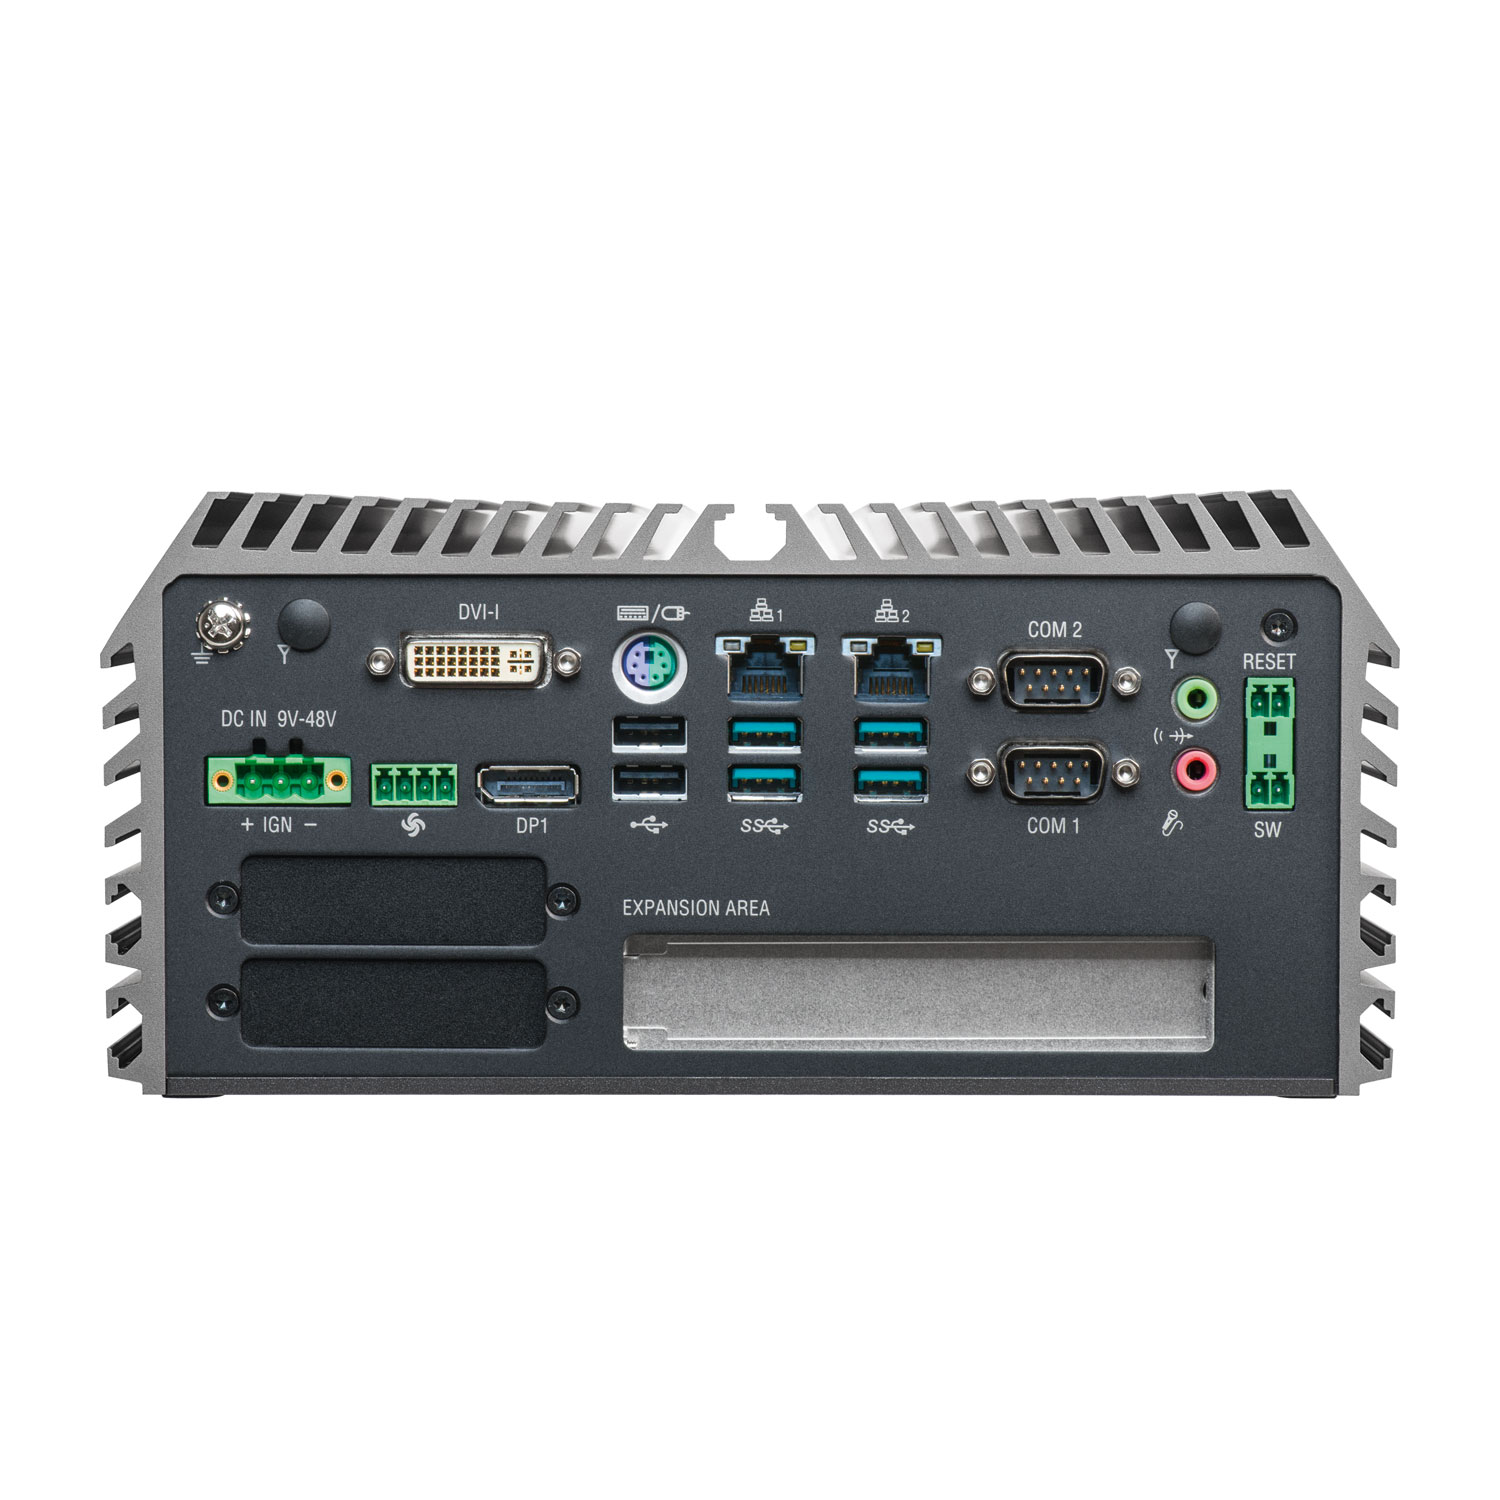 Spectra-PowerBox-31C0-Mini-PC